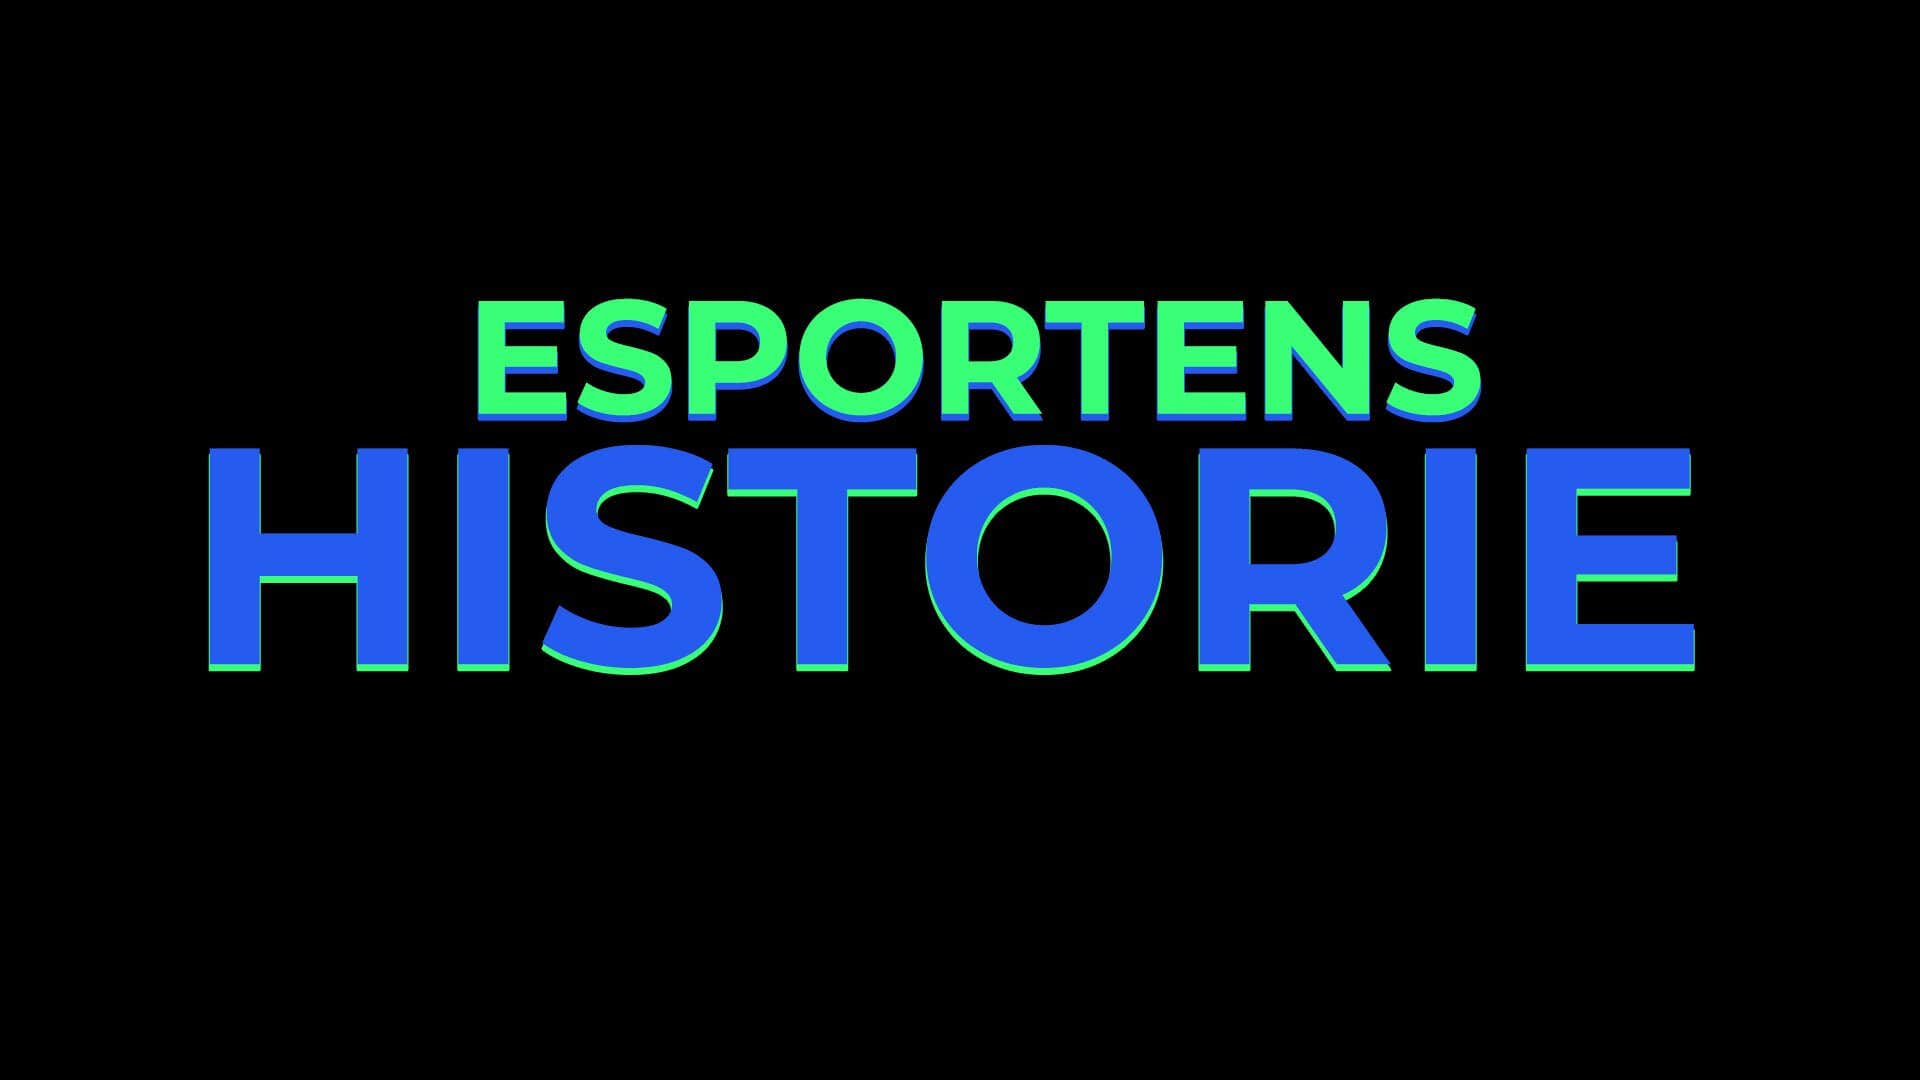 Esportens Historie title